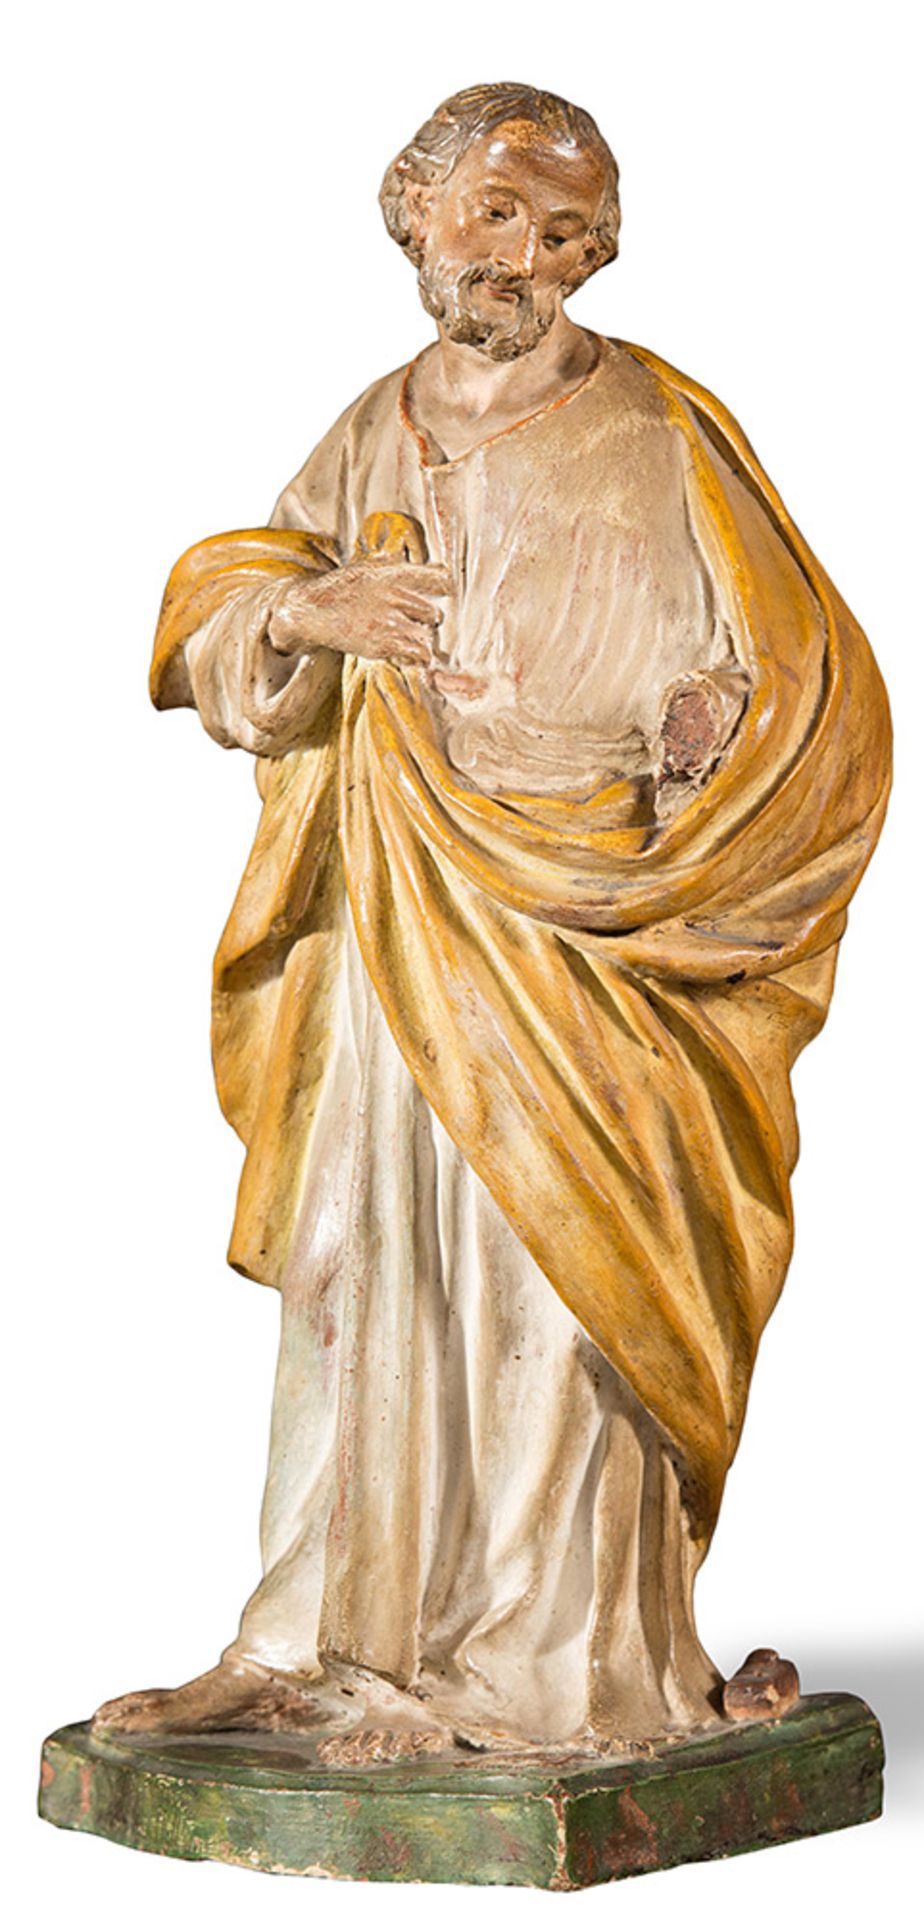 Polychromed terracotta sculpture, "San Giuseppe", 18th Century